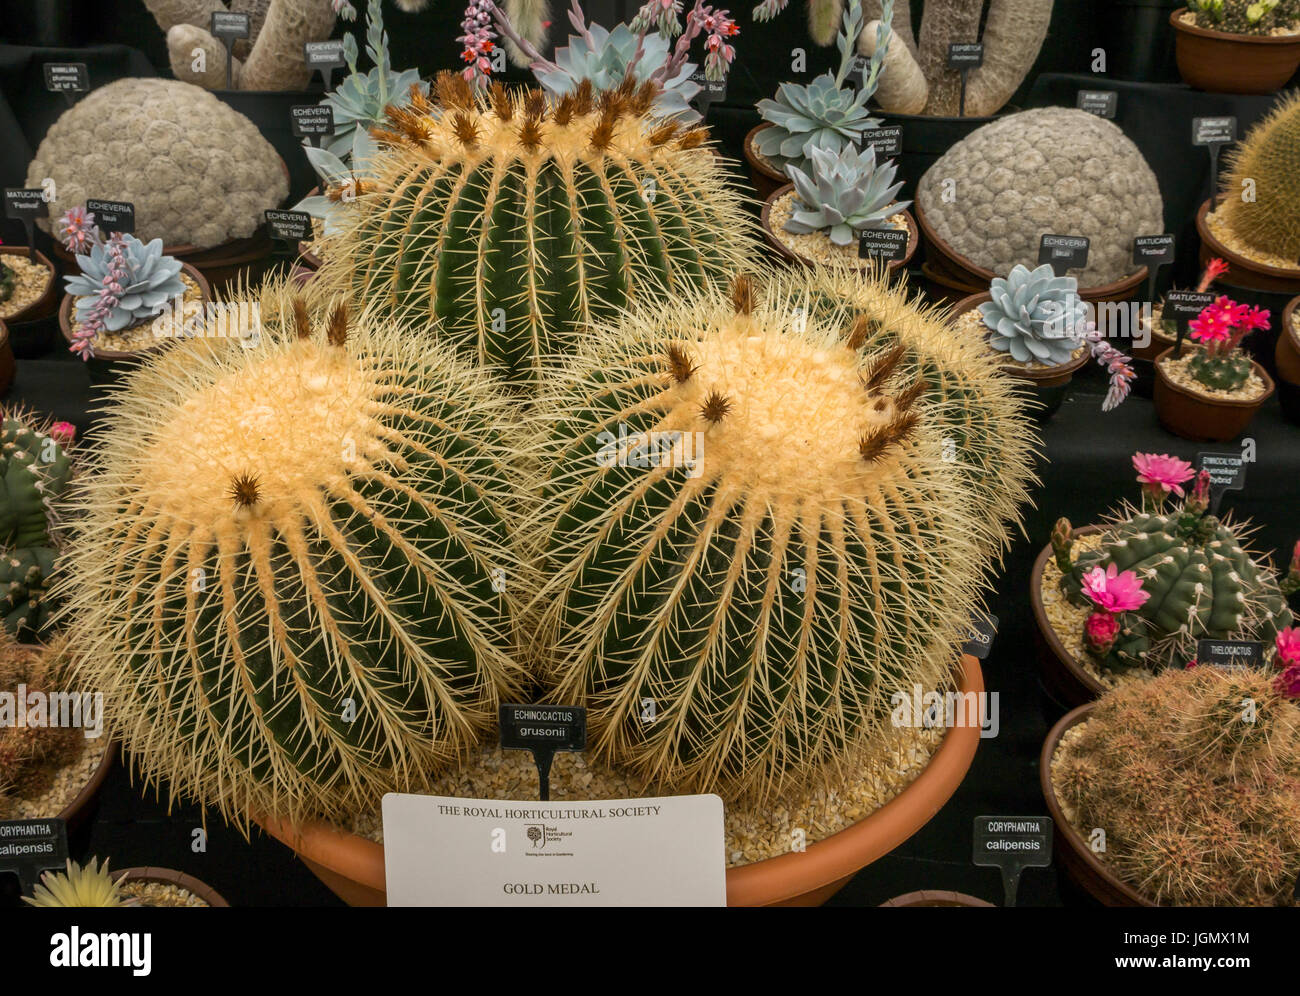 Echinocactus grusonii cactus display at RHS flower show, a gold medal winner, England, UK Stock Photo